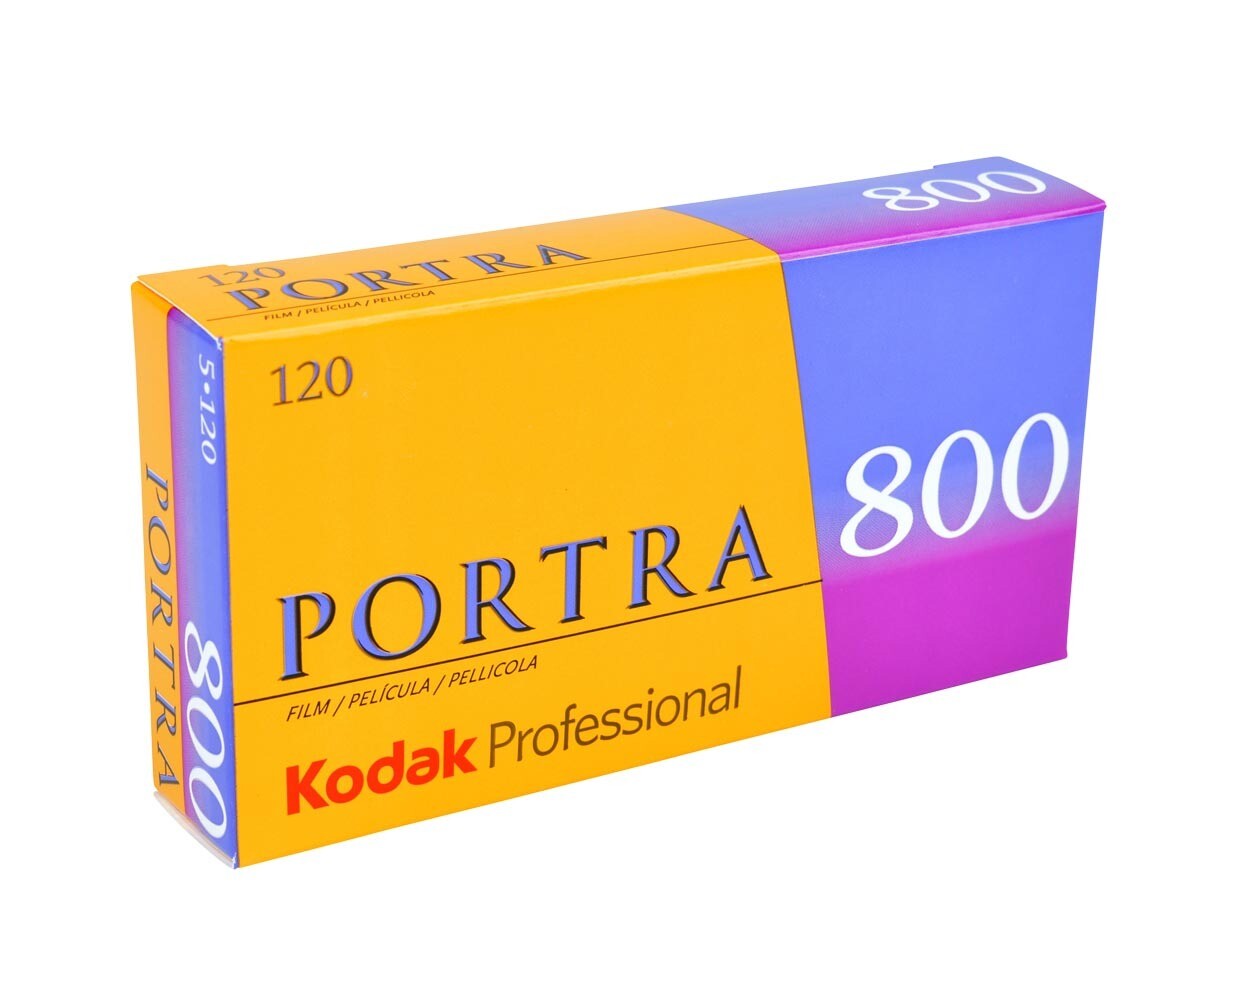 KODAK Portra 800, 120 Rollfilm expired 07/2023